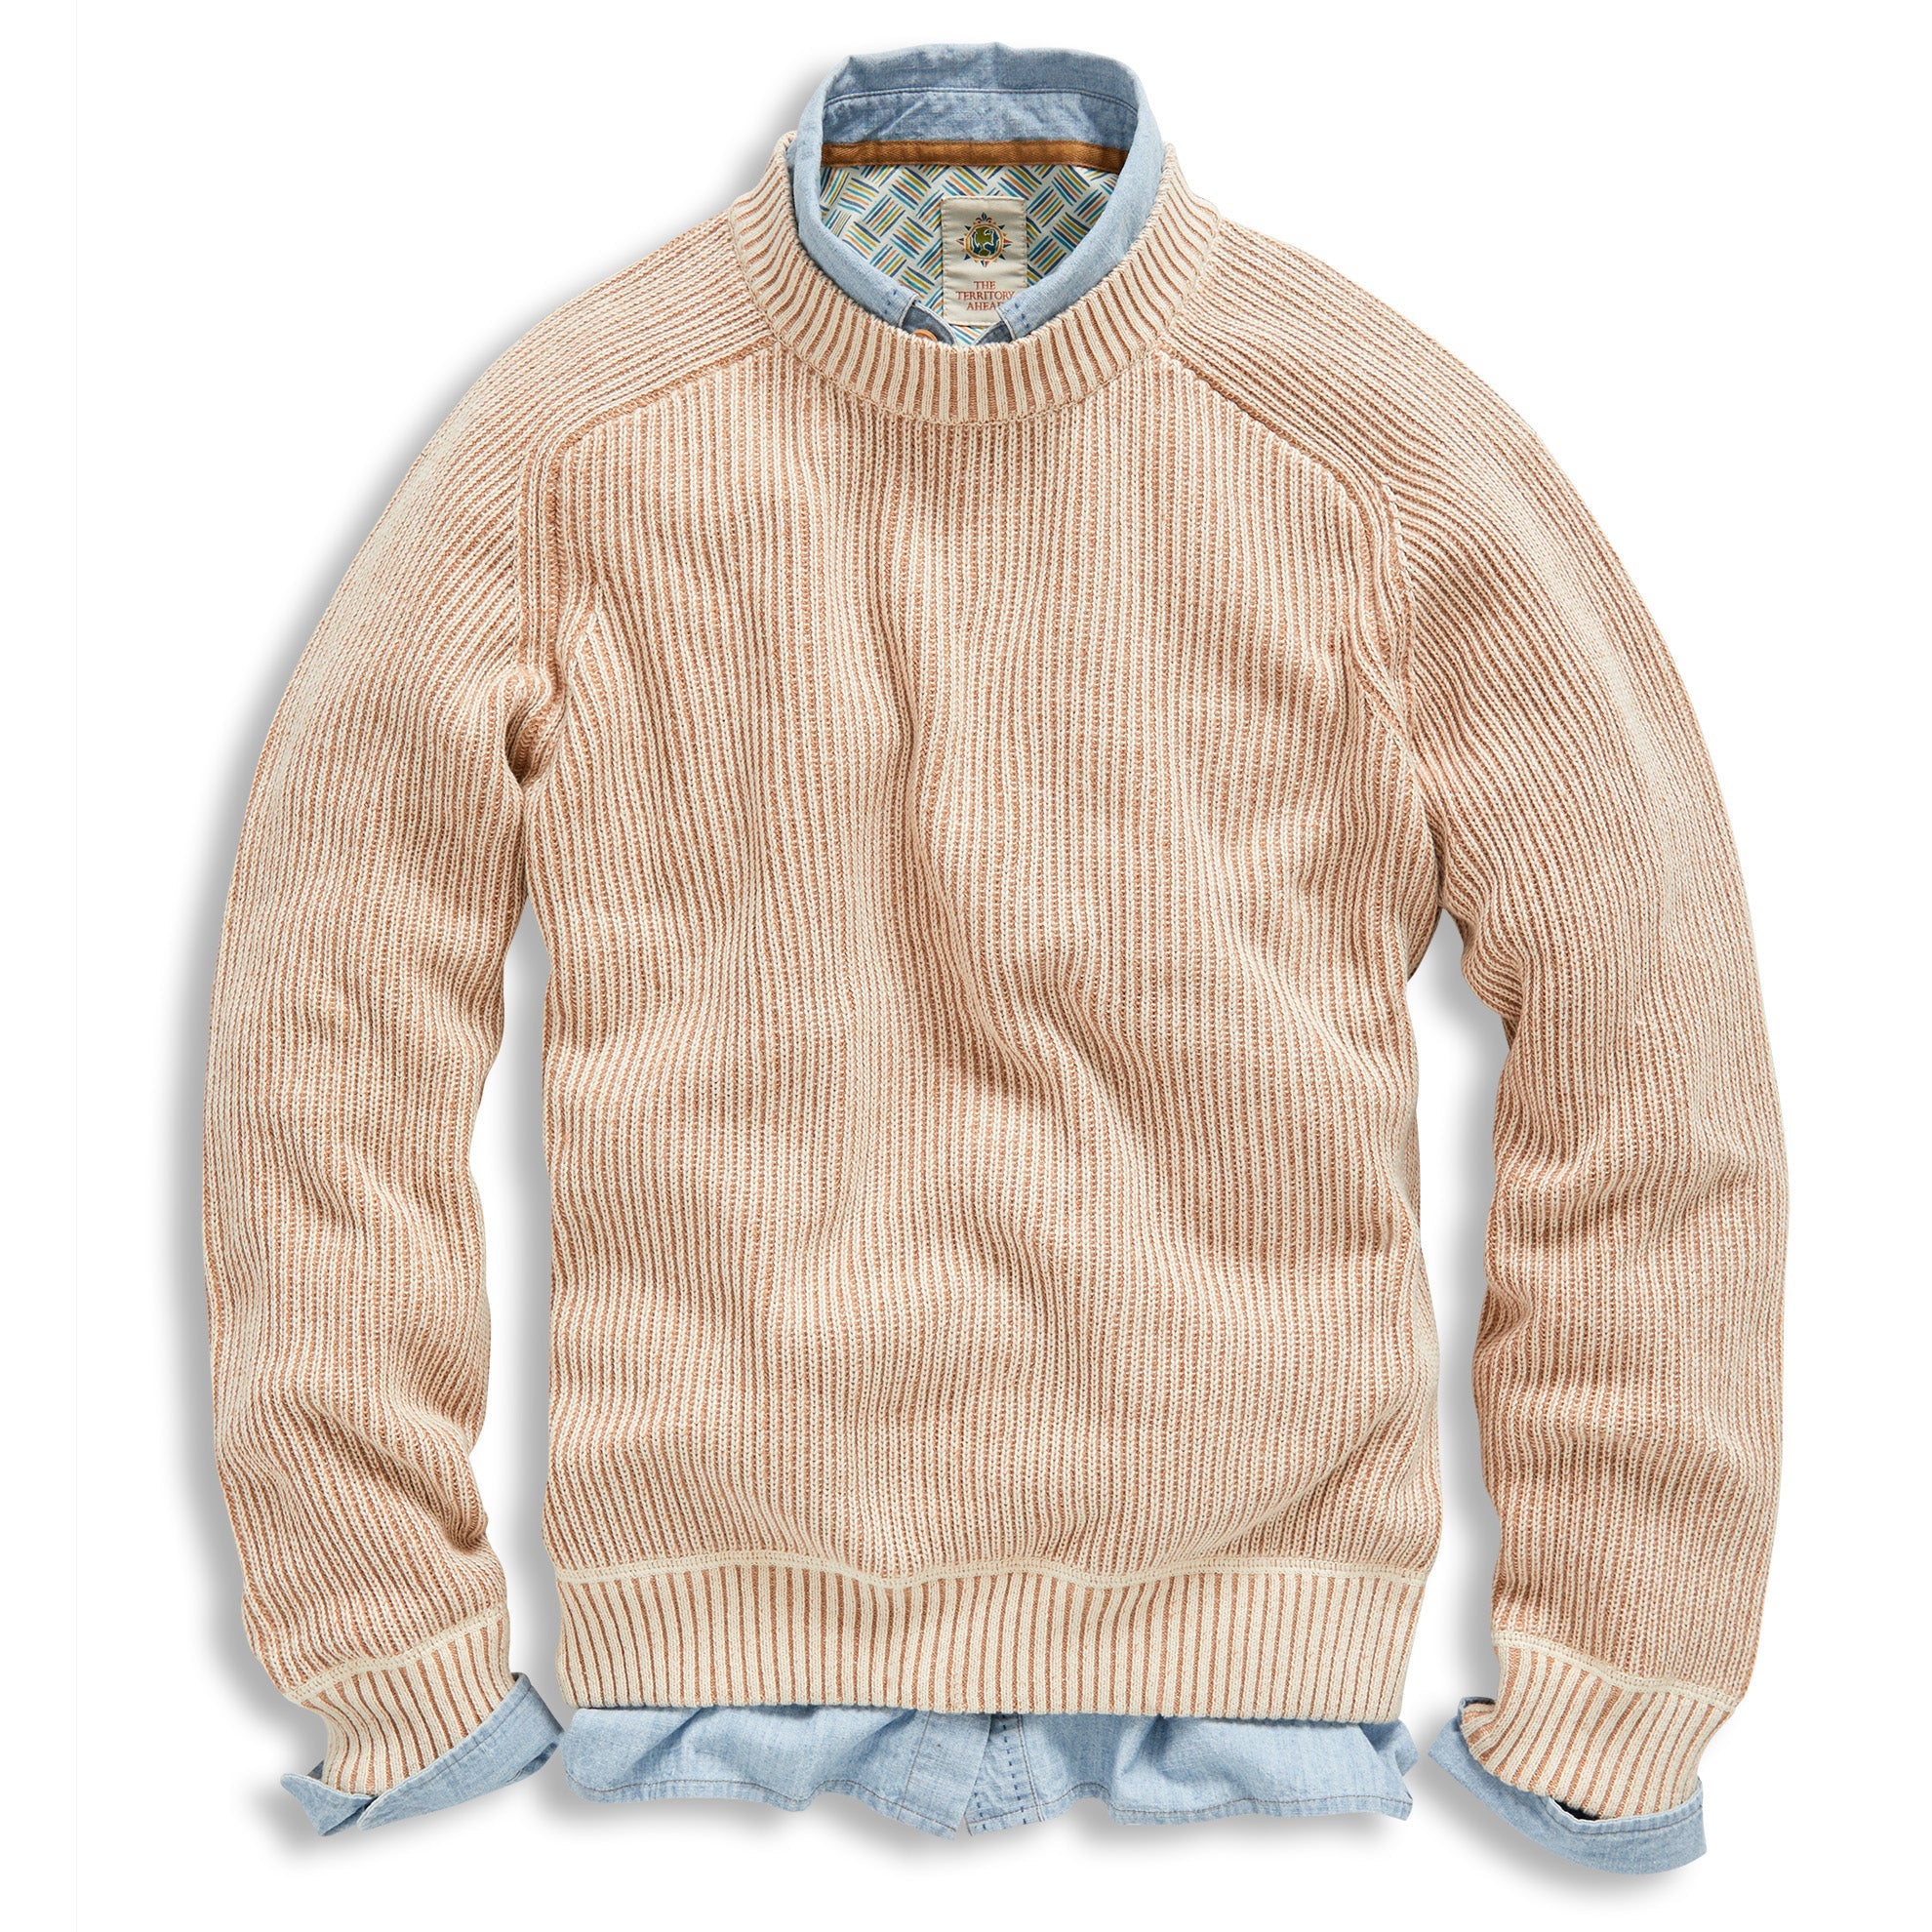 Circa 1969 Cotton Sweatshirt Sweater - Sale